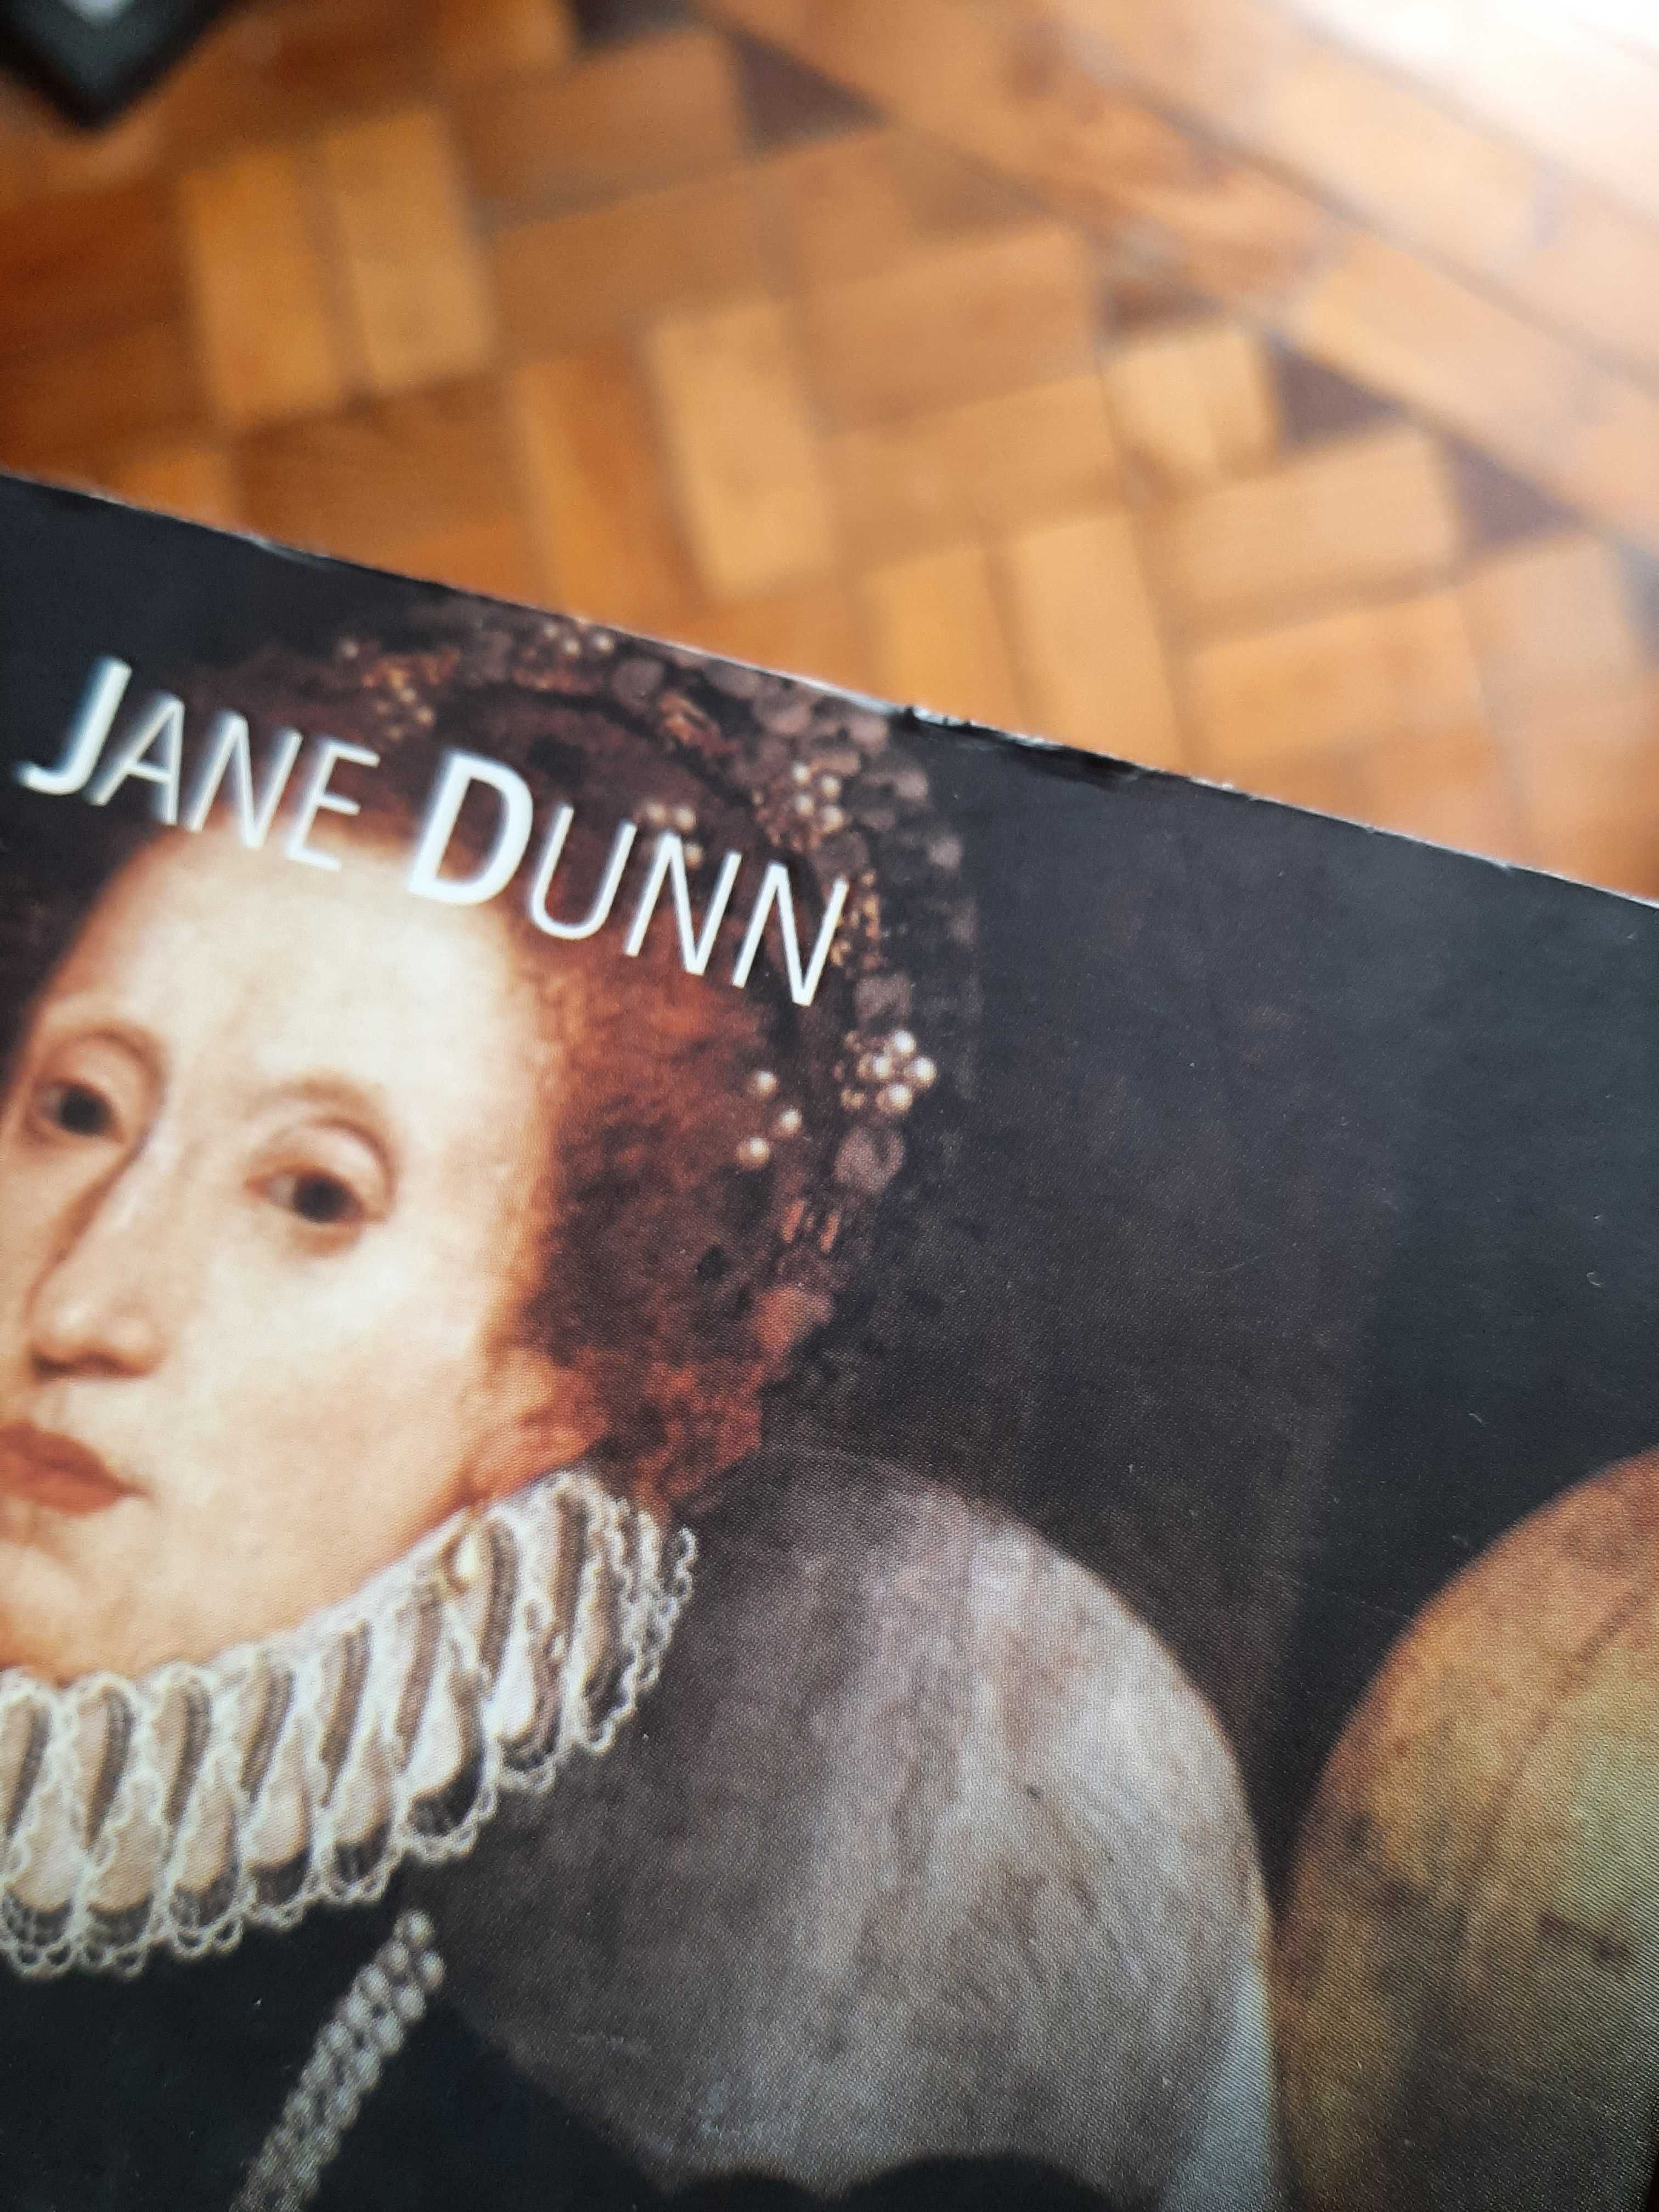 Jane Dunn - Isabel Tudor e Maria Stuart : primas, rivais e assassinas